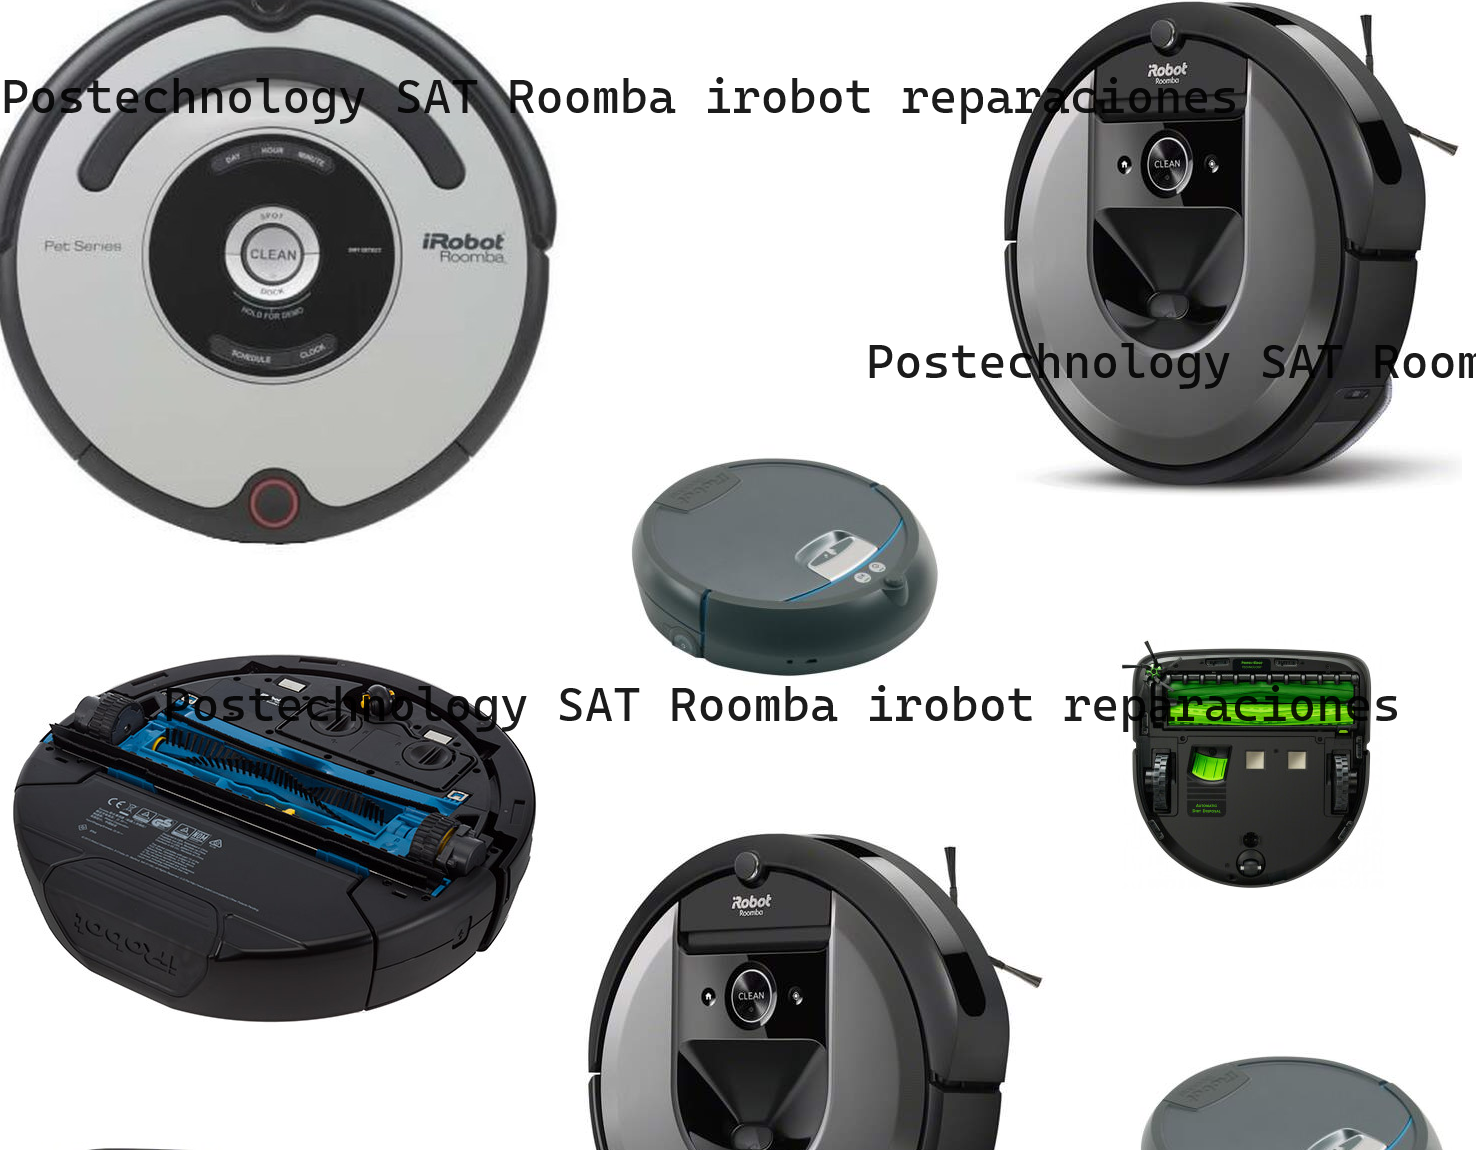 Roomba irobot reparar